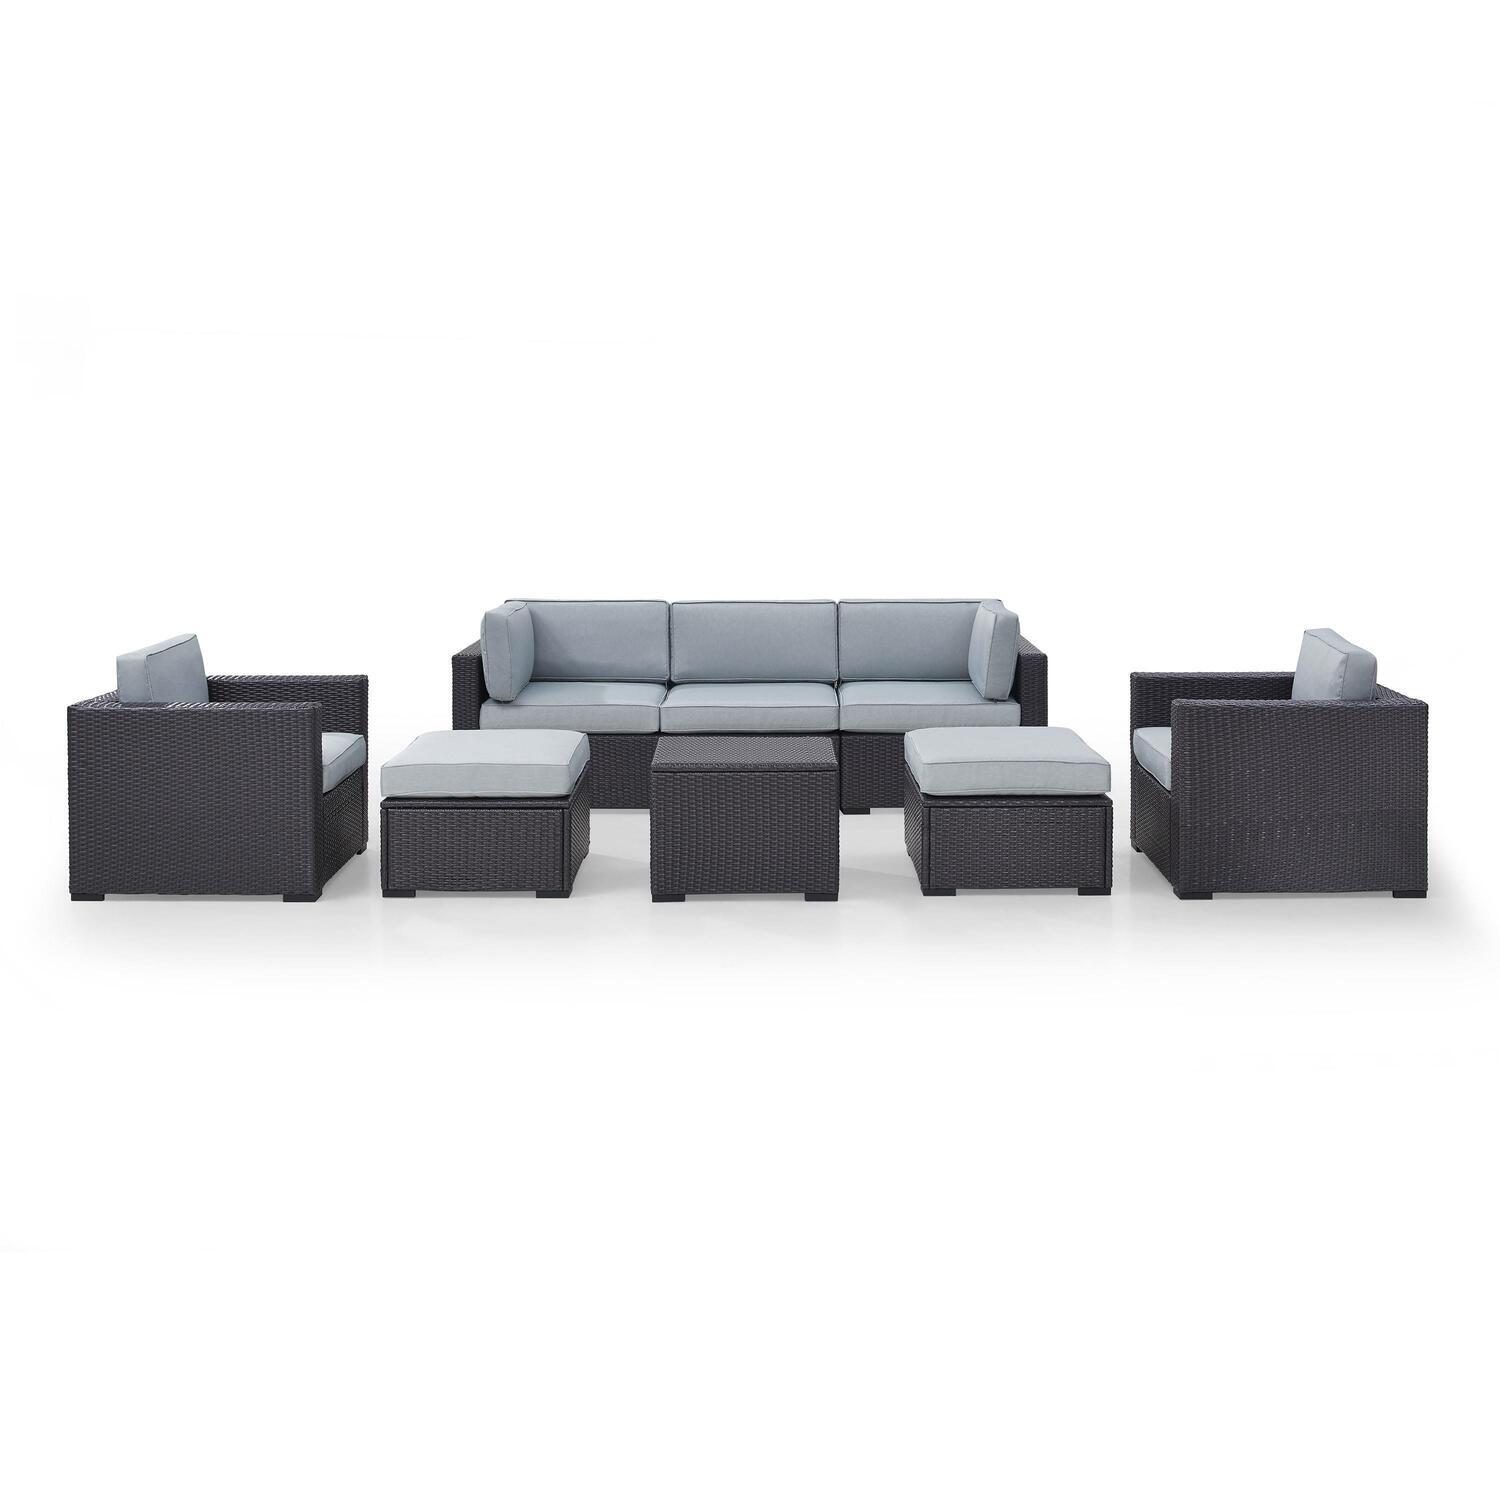 Crosley Furniture Biscayne 7 Piece Metal Patio Sofa Set in Brown/Blue - image 1 of 4